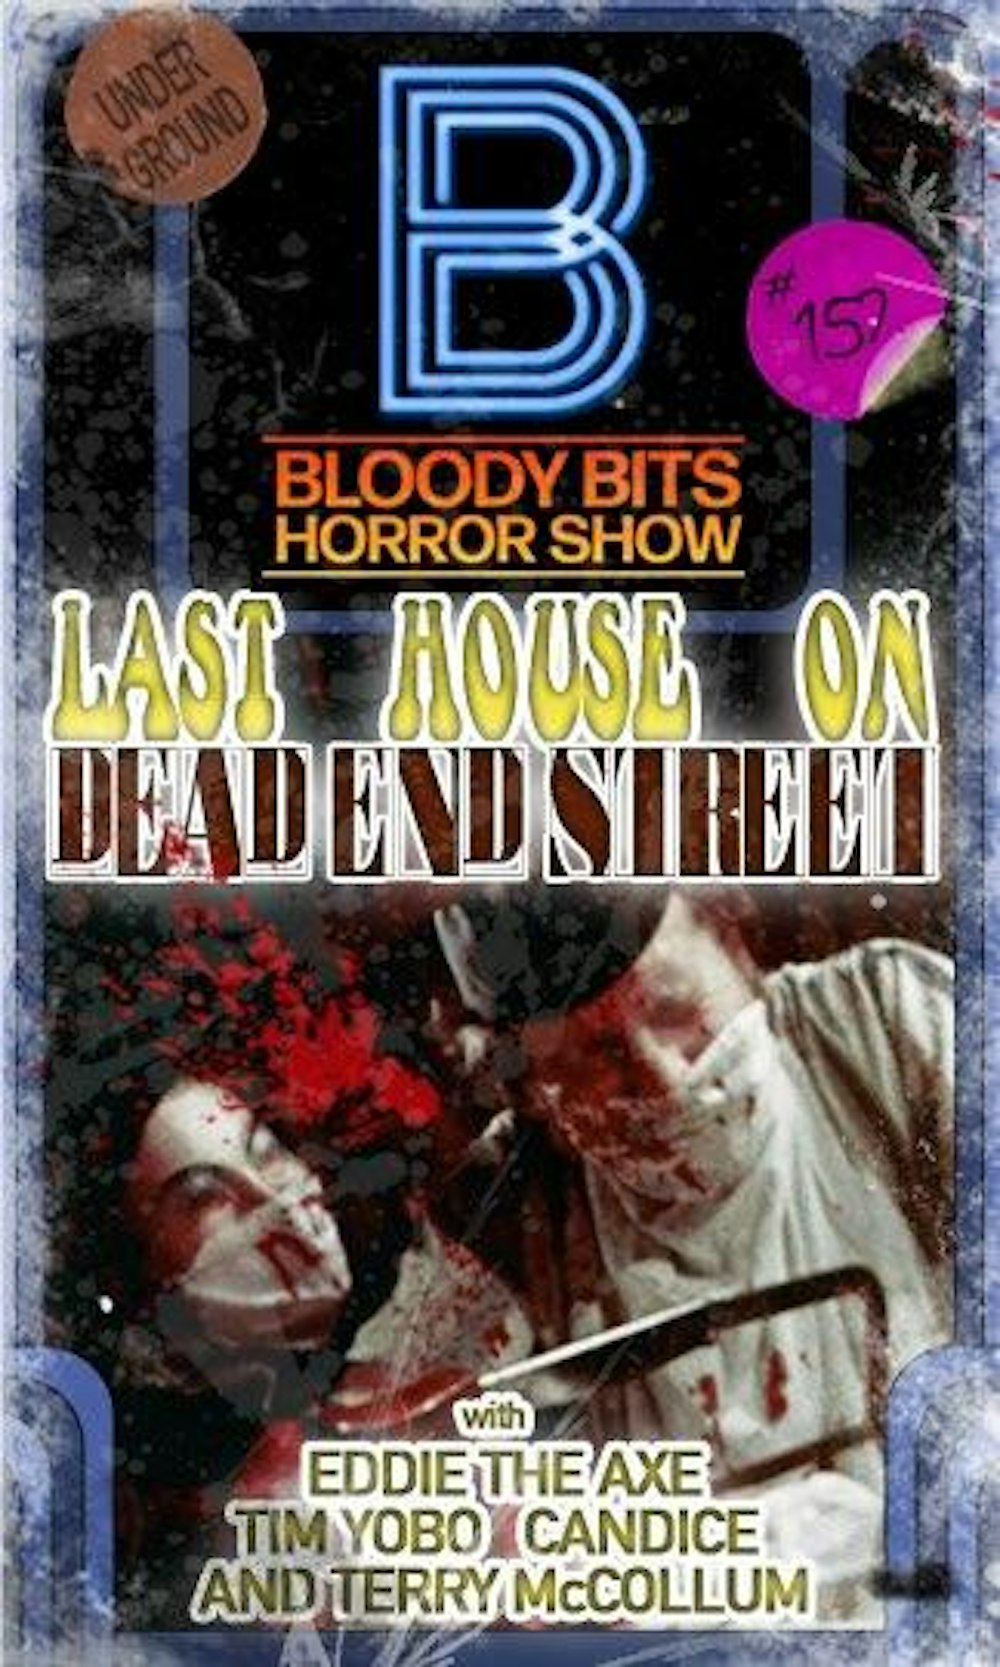 EP152 - Last House on Dead End Street